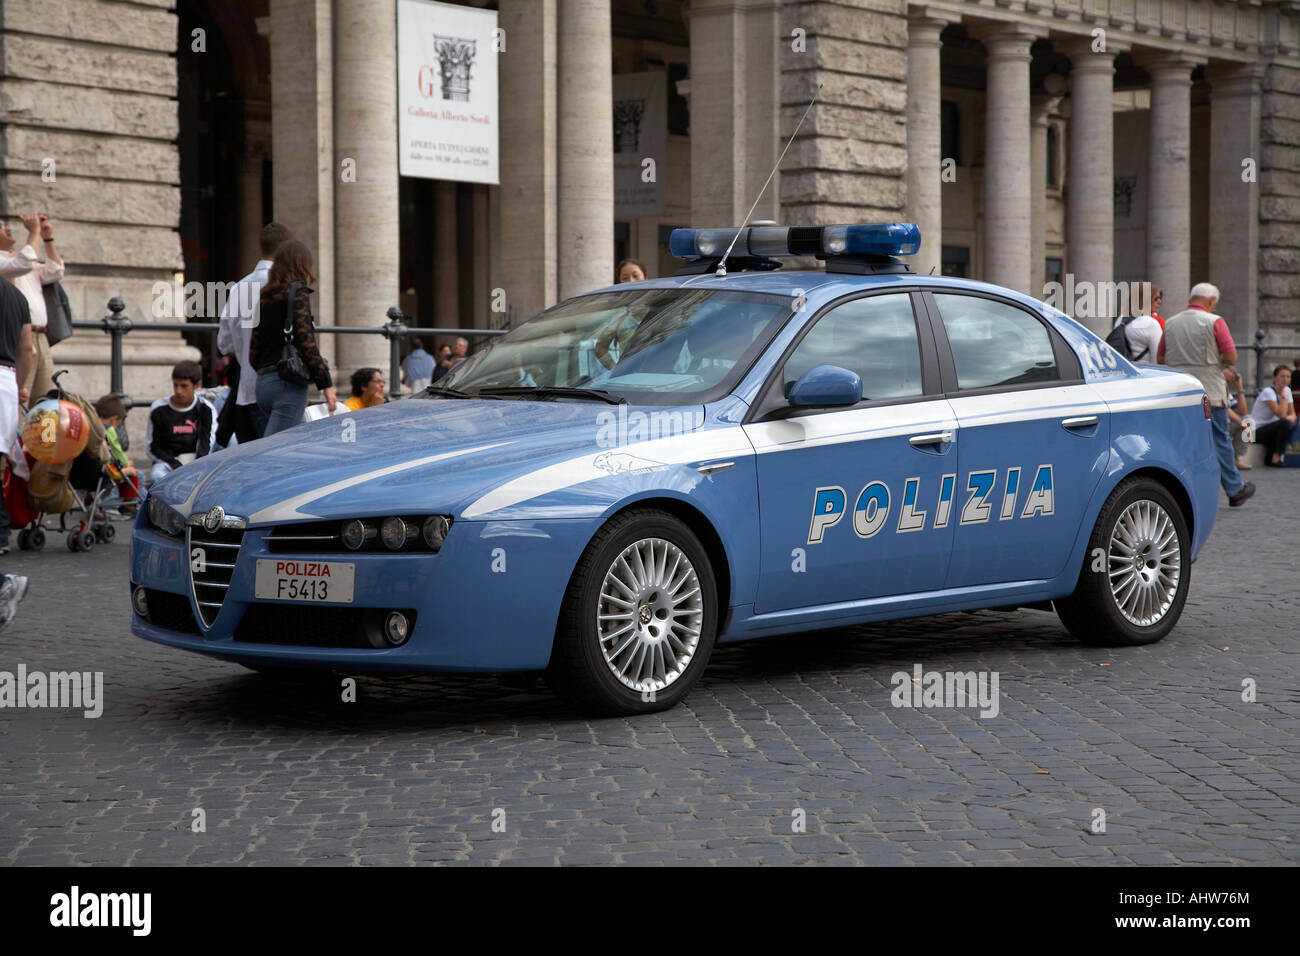 Alfa Romeo 159 rapide squadra volante voiture de police sur la Piazza Colonna Rome Lazio Italie Banque D'Images